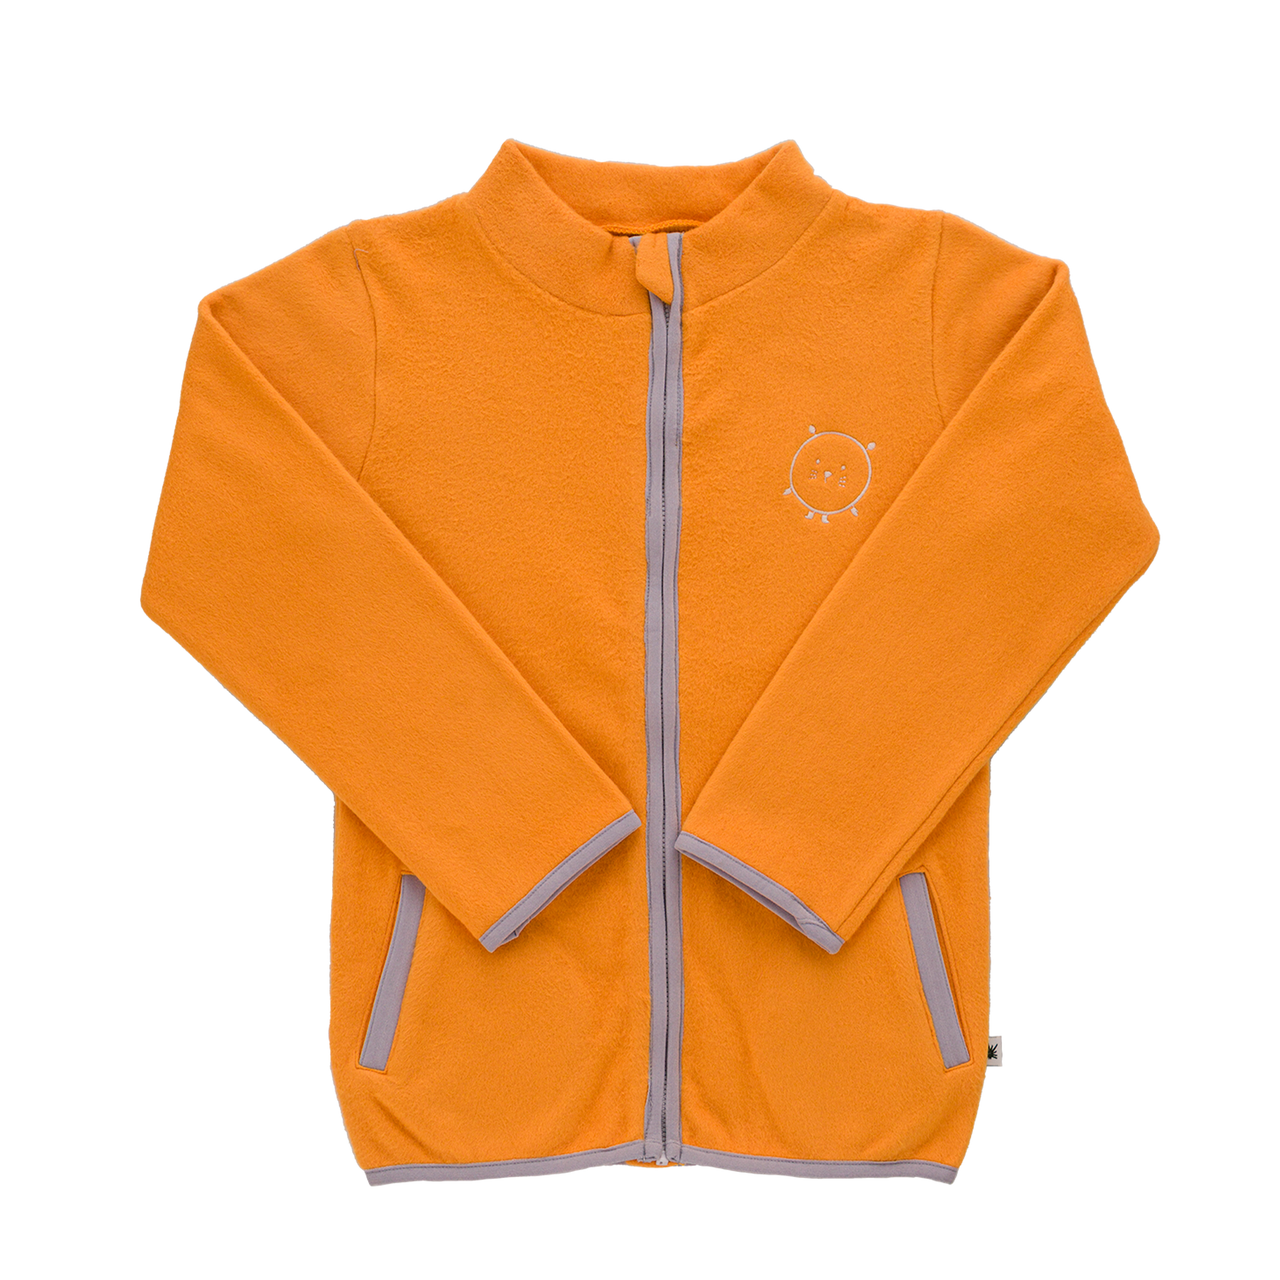 "Easy" Polar Fleece Jacket - Orange